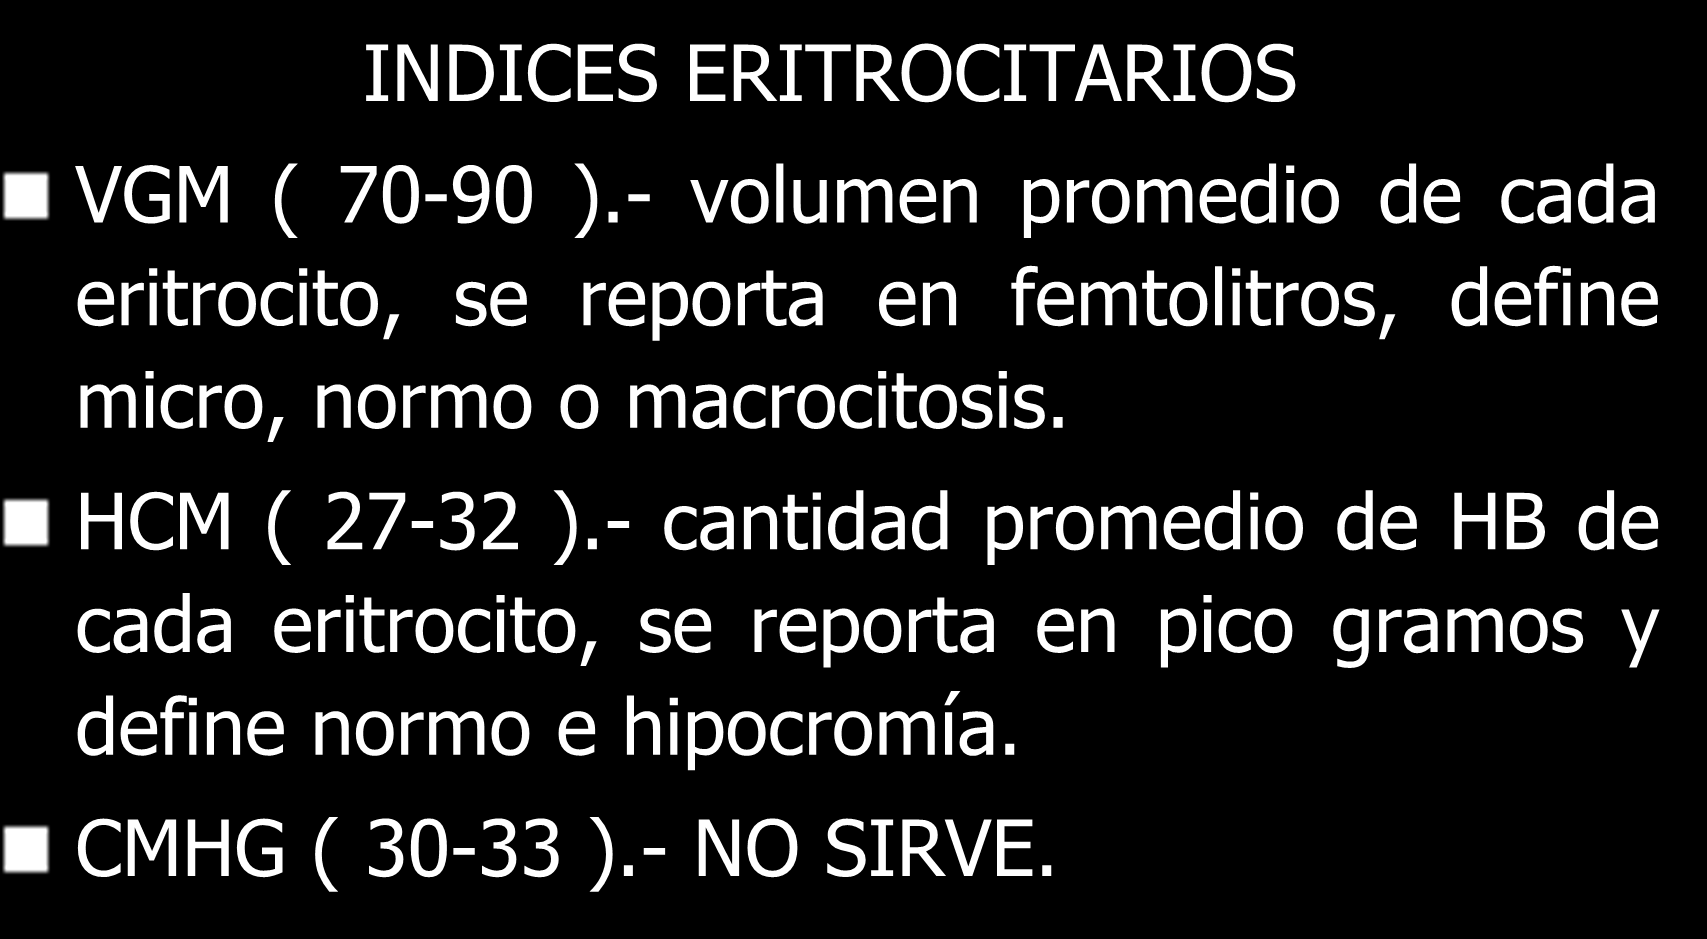 INDICES ERITROCITARIOS VGM ( 70-90 ).- volumen promedio de cada eritrocito, se reporta en femtolitros, define micro, normo o macrocitosis.